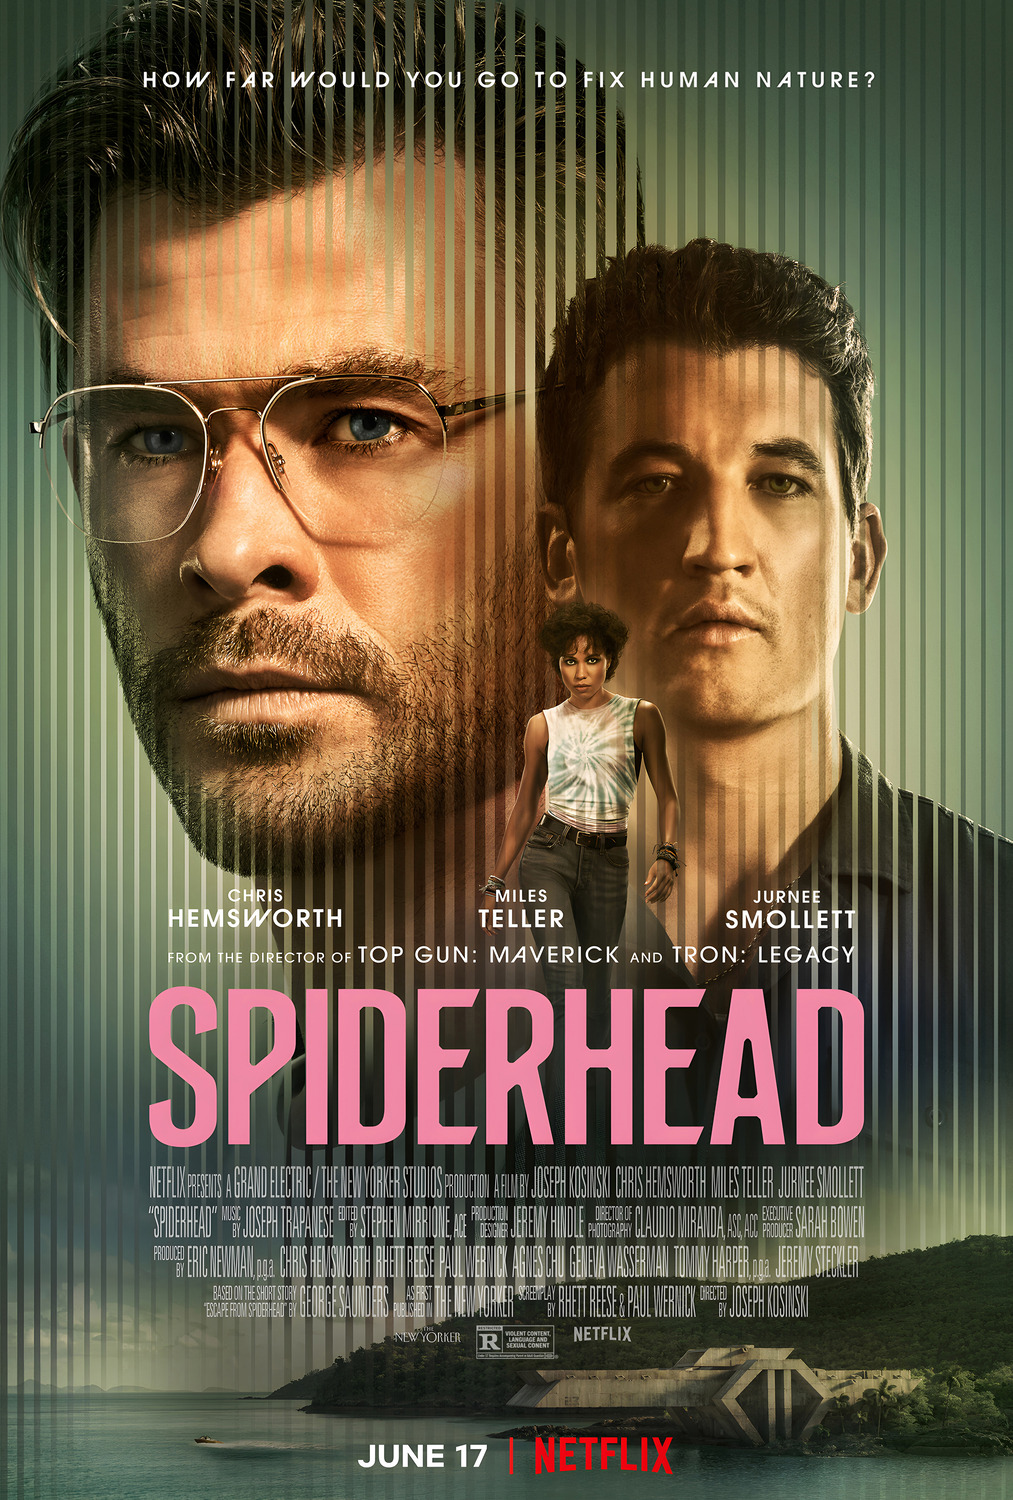 'Spiderhead' film poster. 